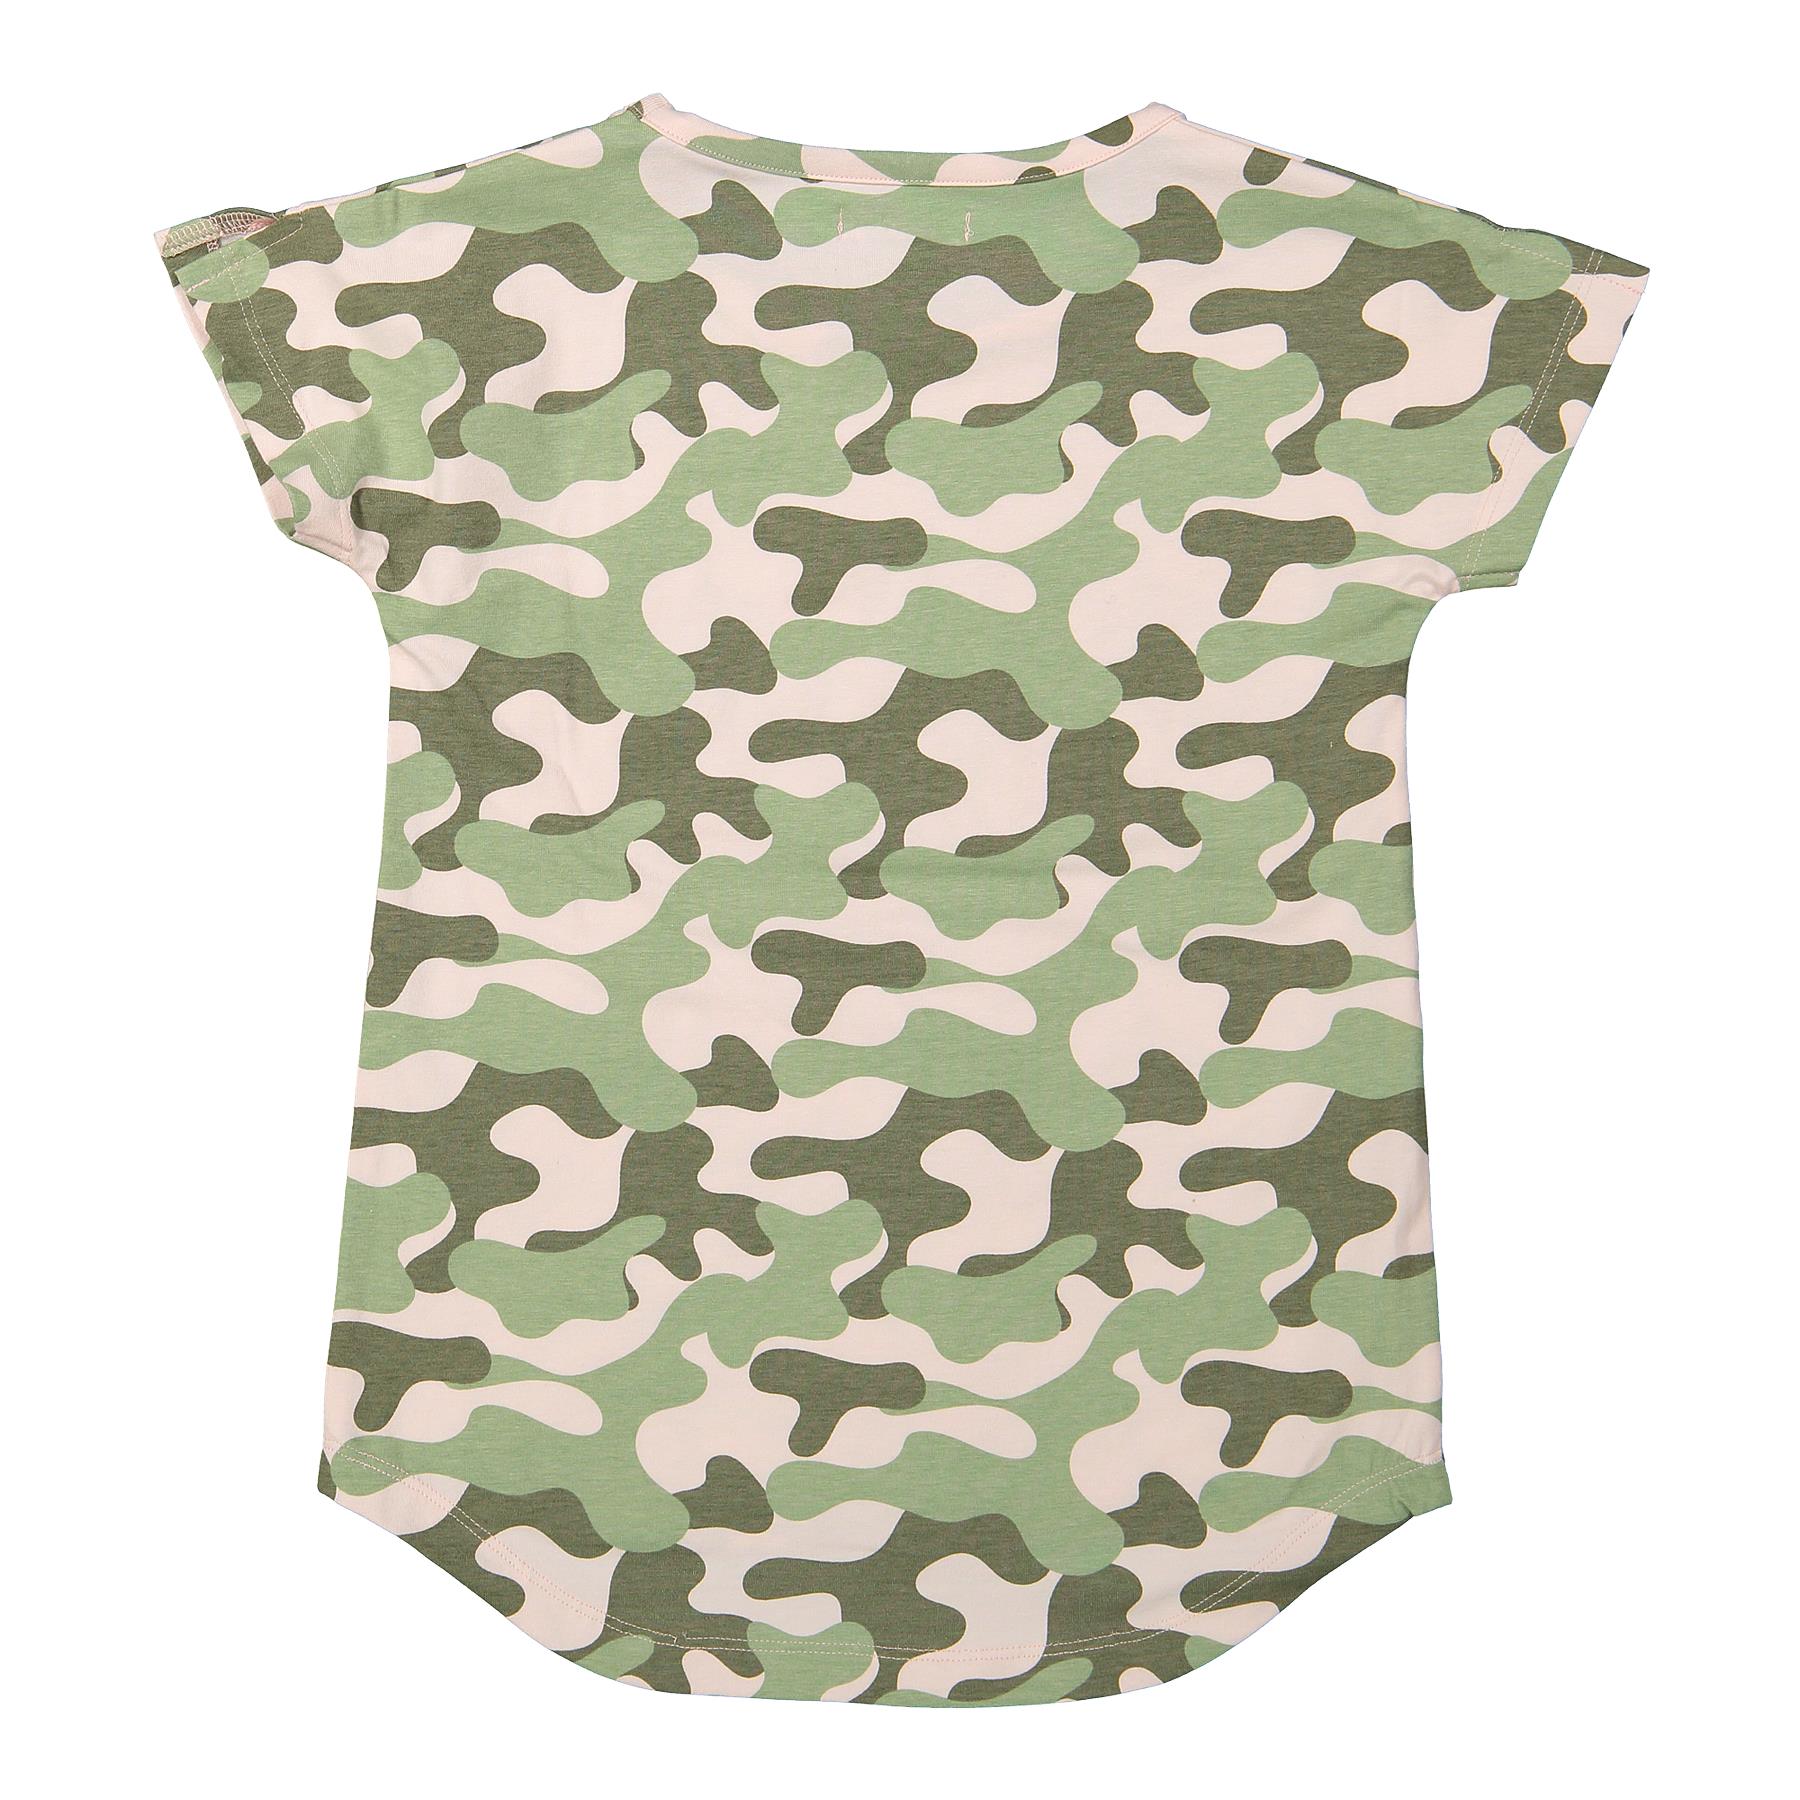 DJ Dutchjeans T-Shirt faded light pink & army green